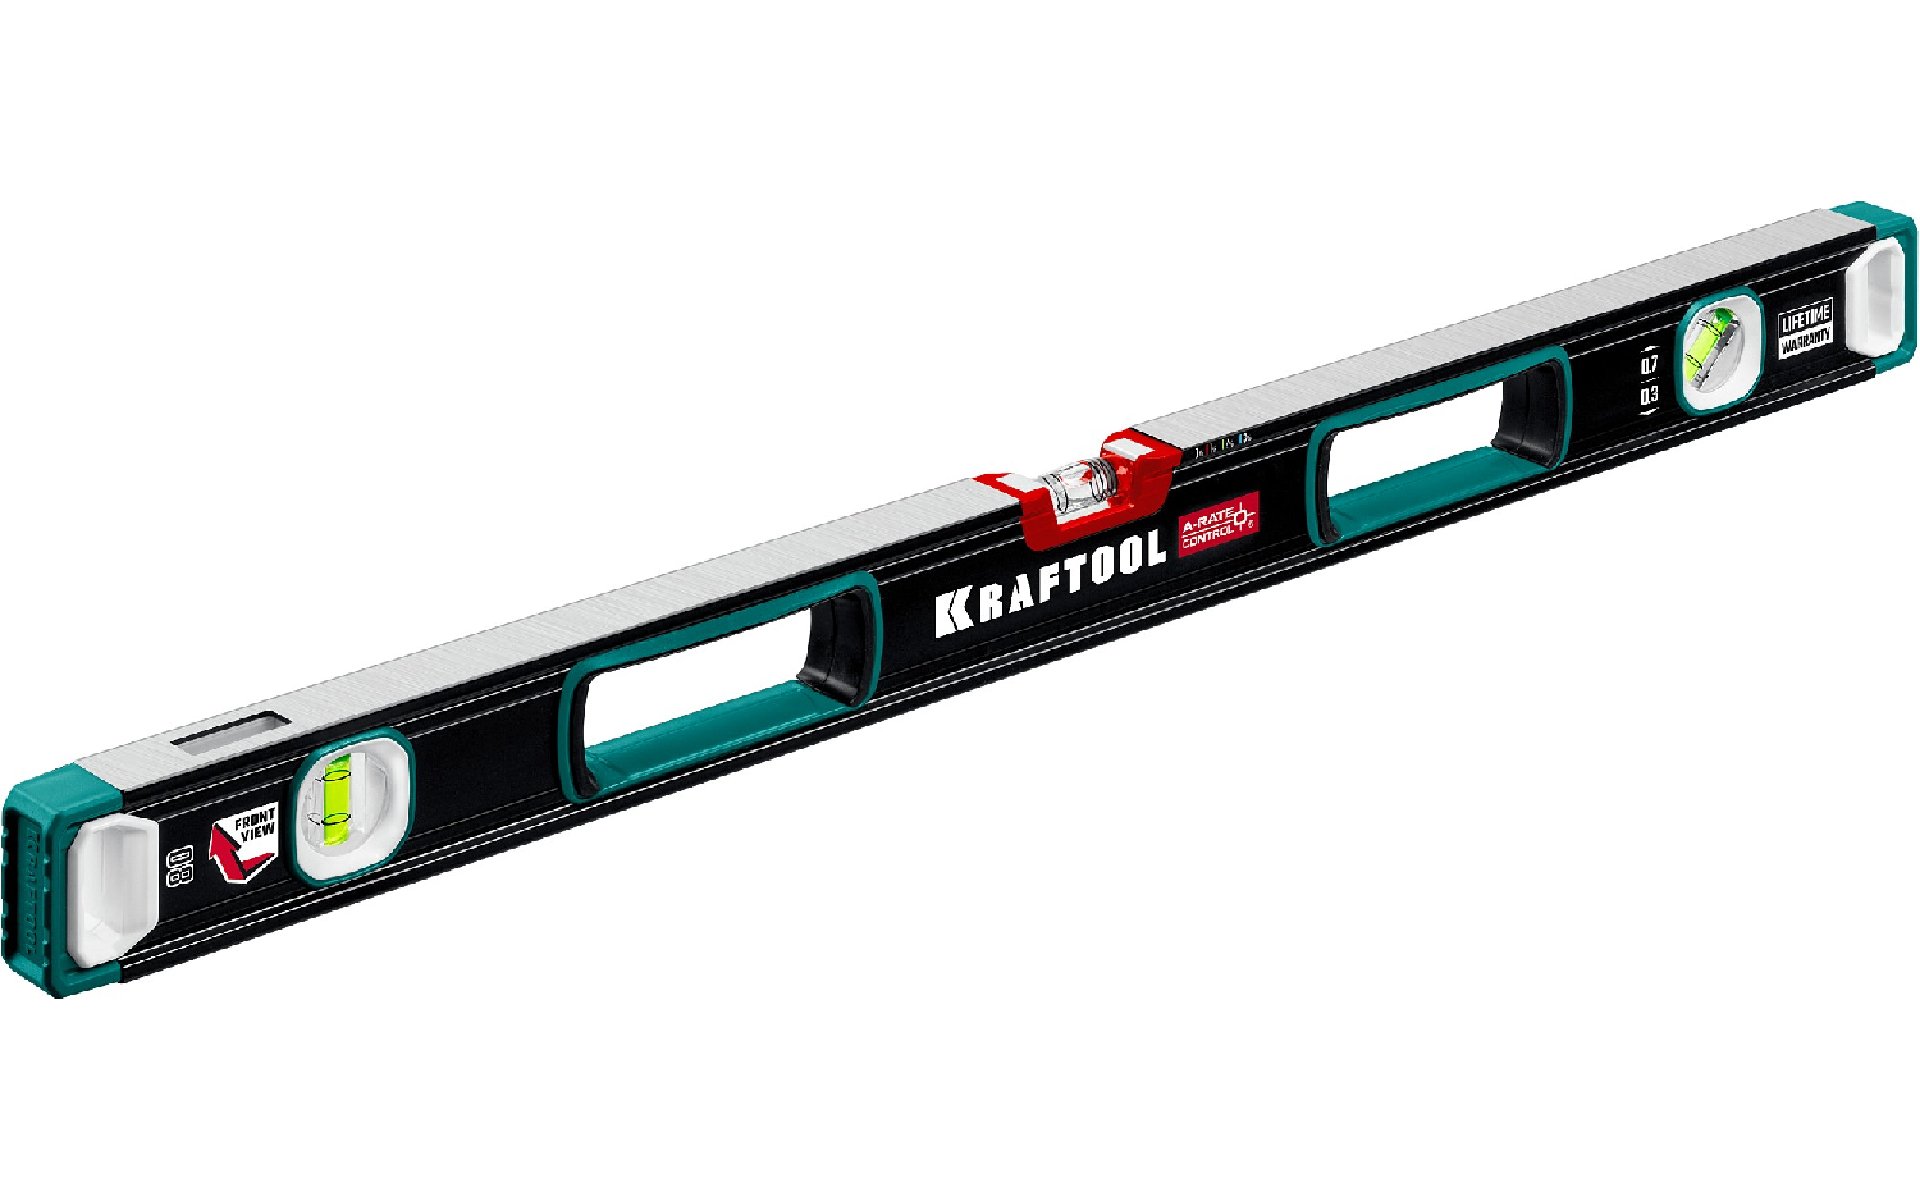   KRAFTOOL A-Rate Control    800  34986-60 (34986-80)